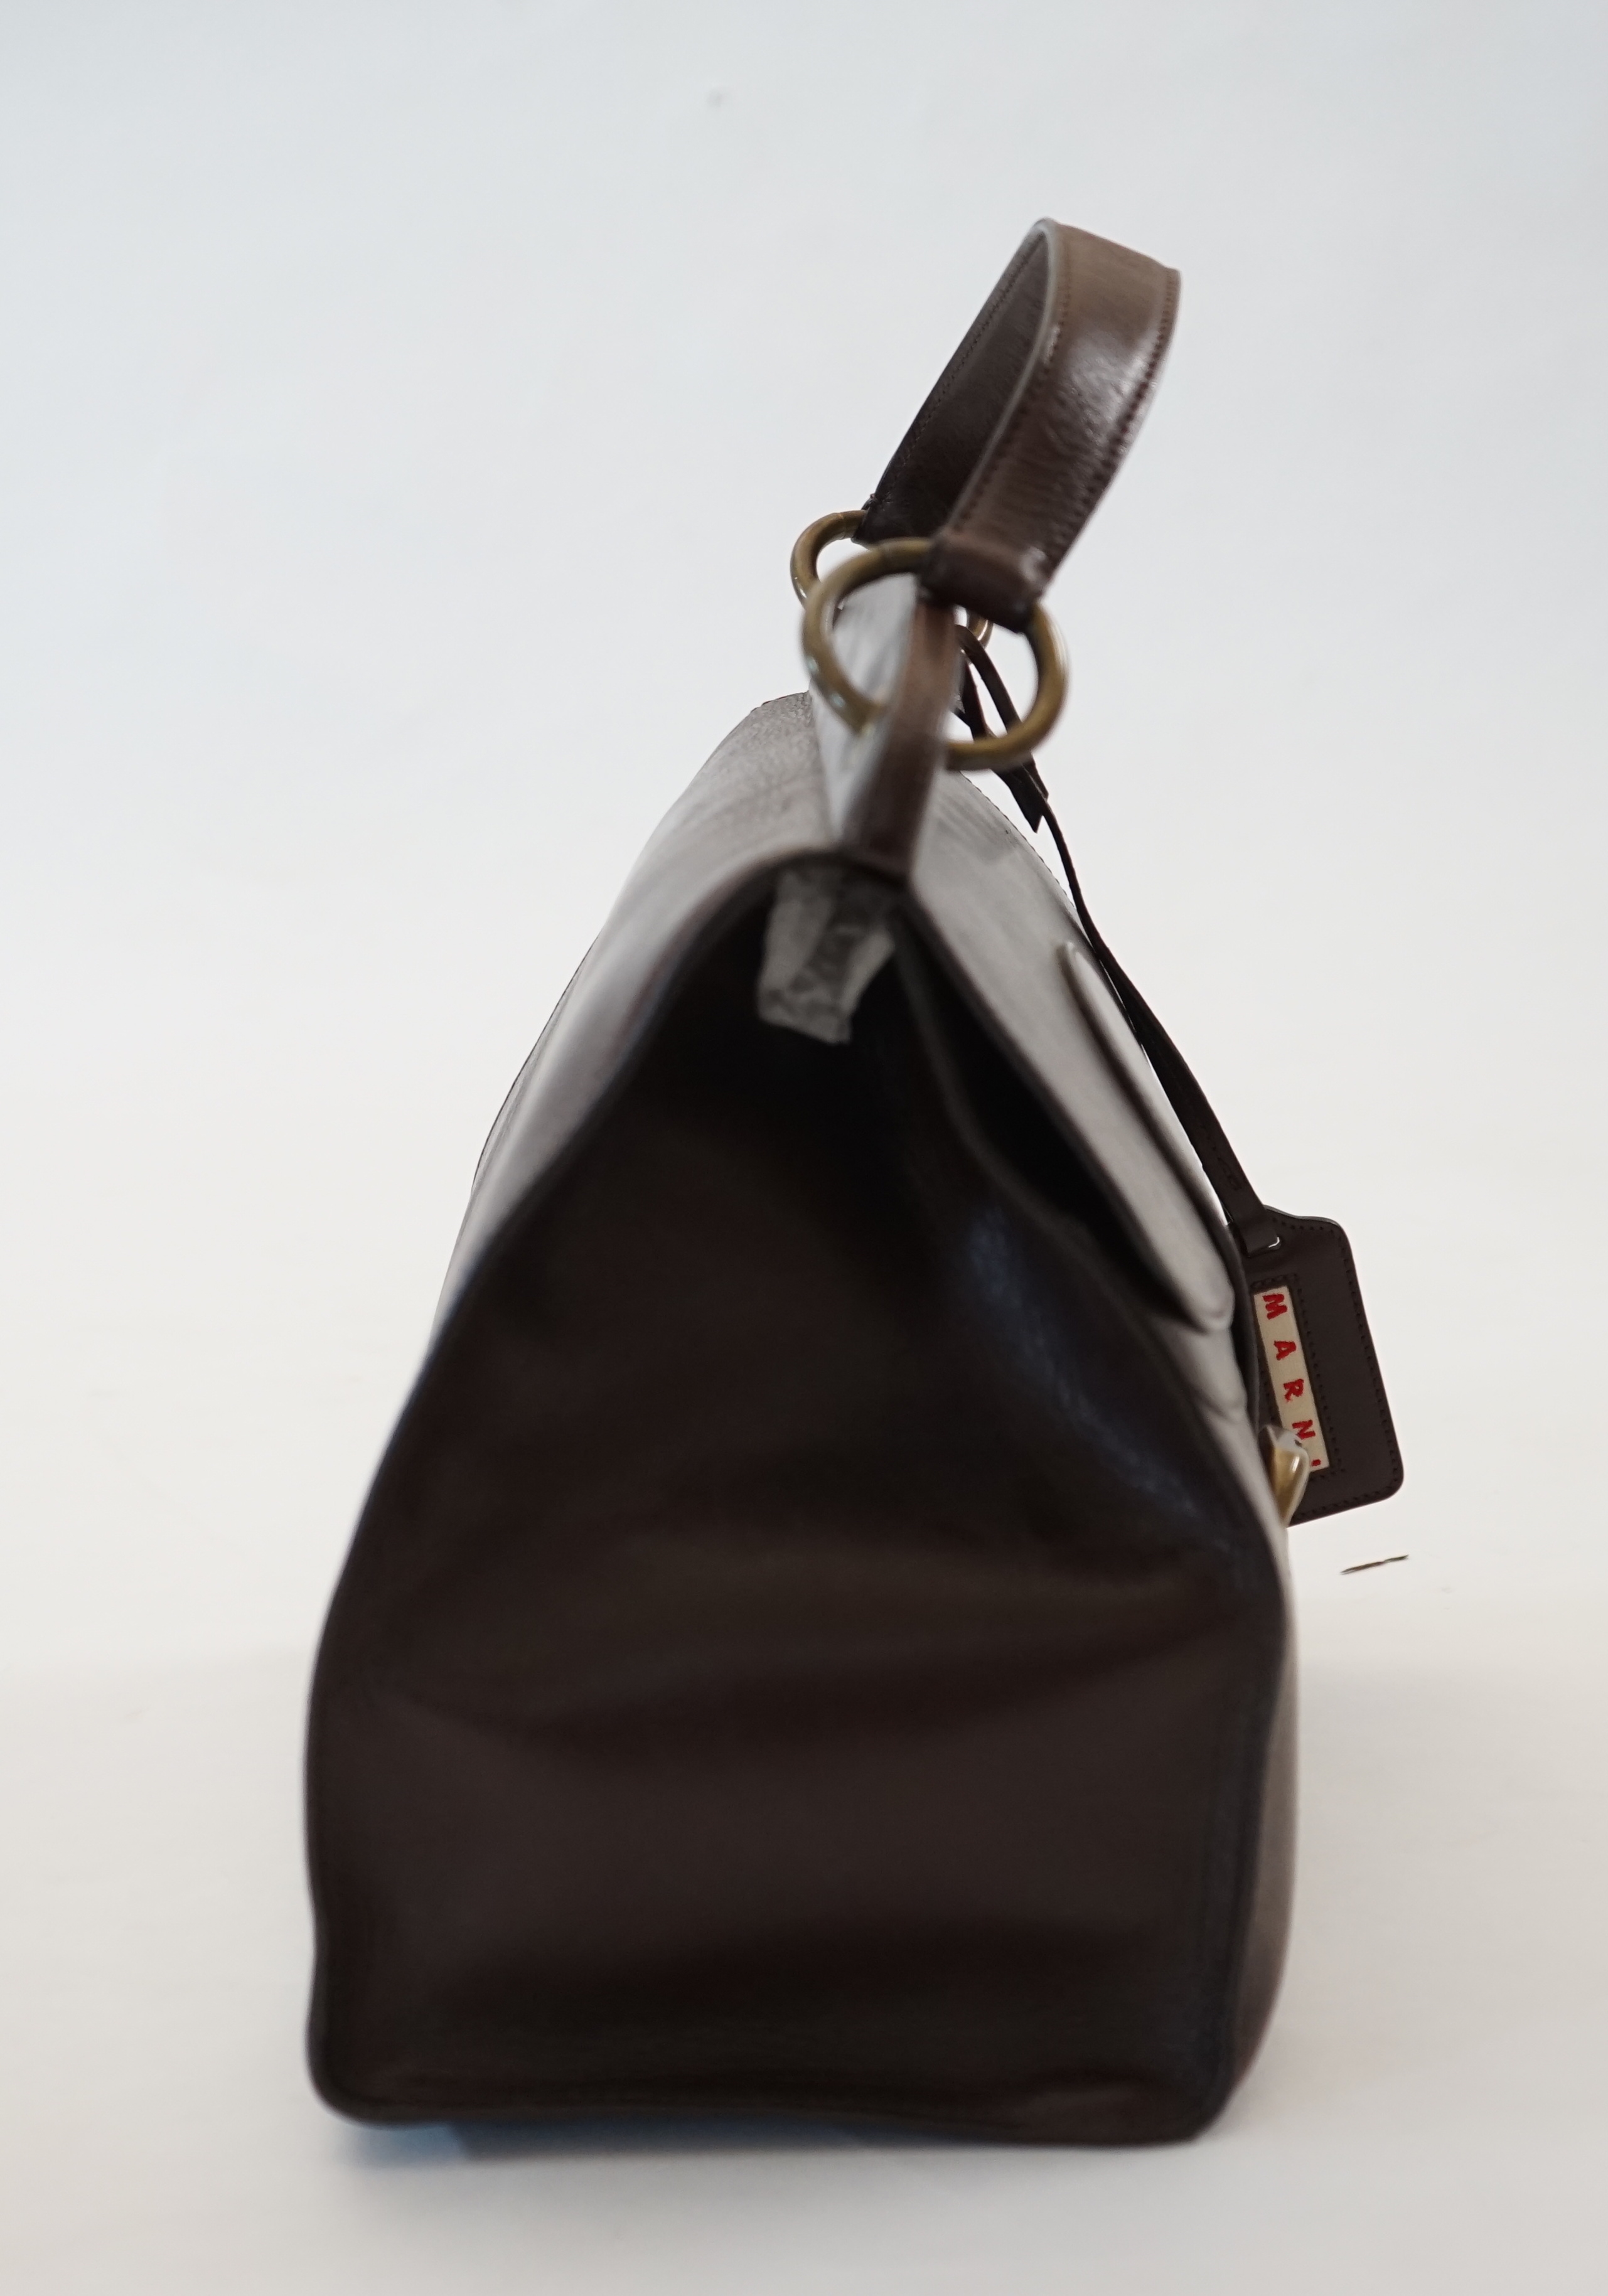 A Marni brown leather satchel bag, width 34cm, depth 18cm, height 28cm